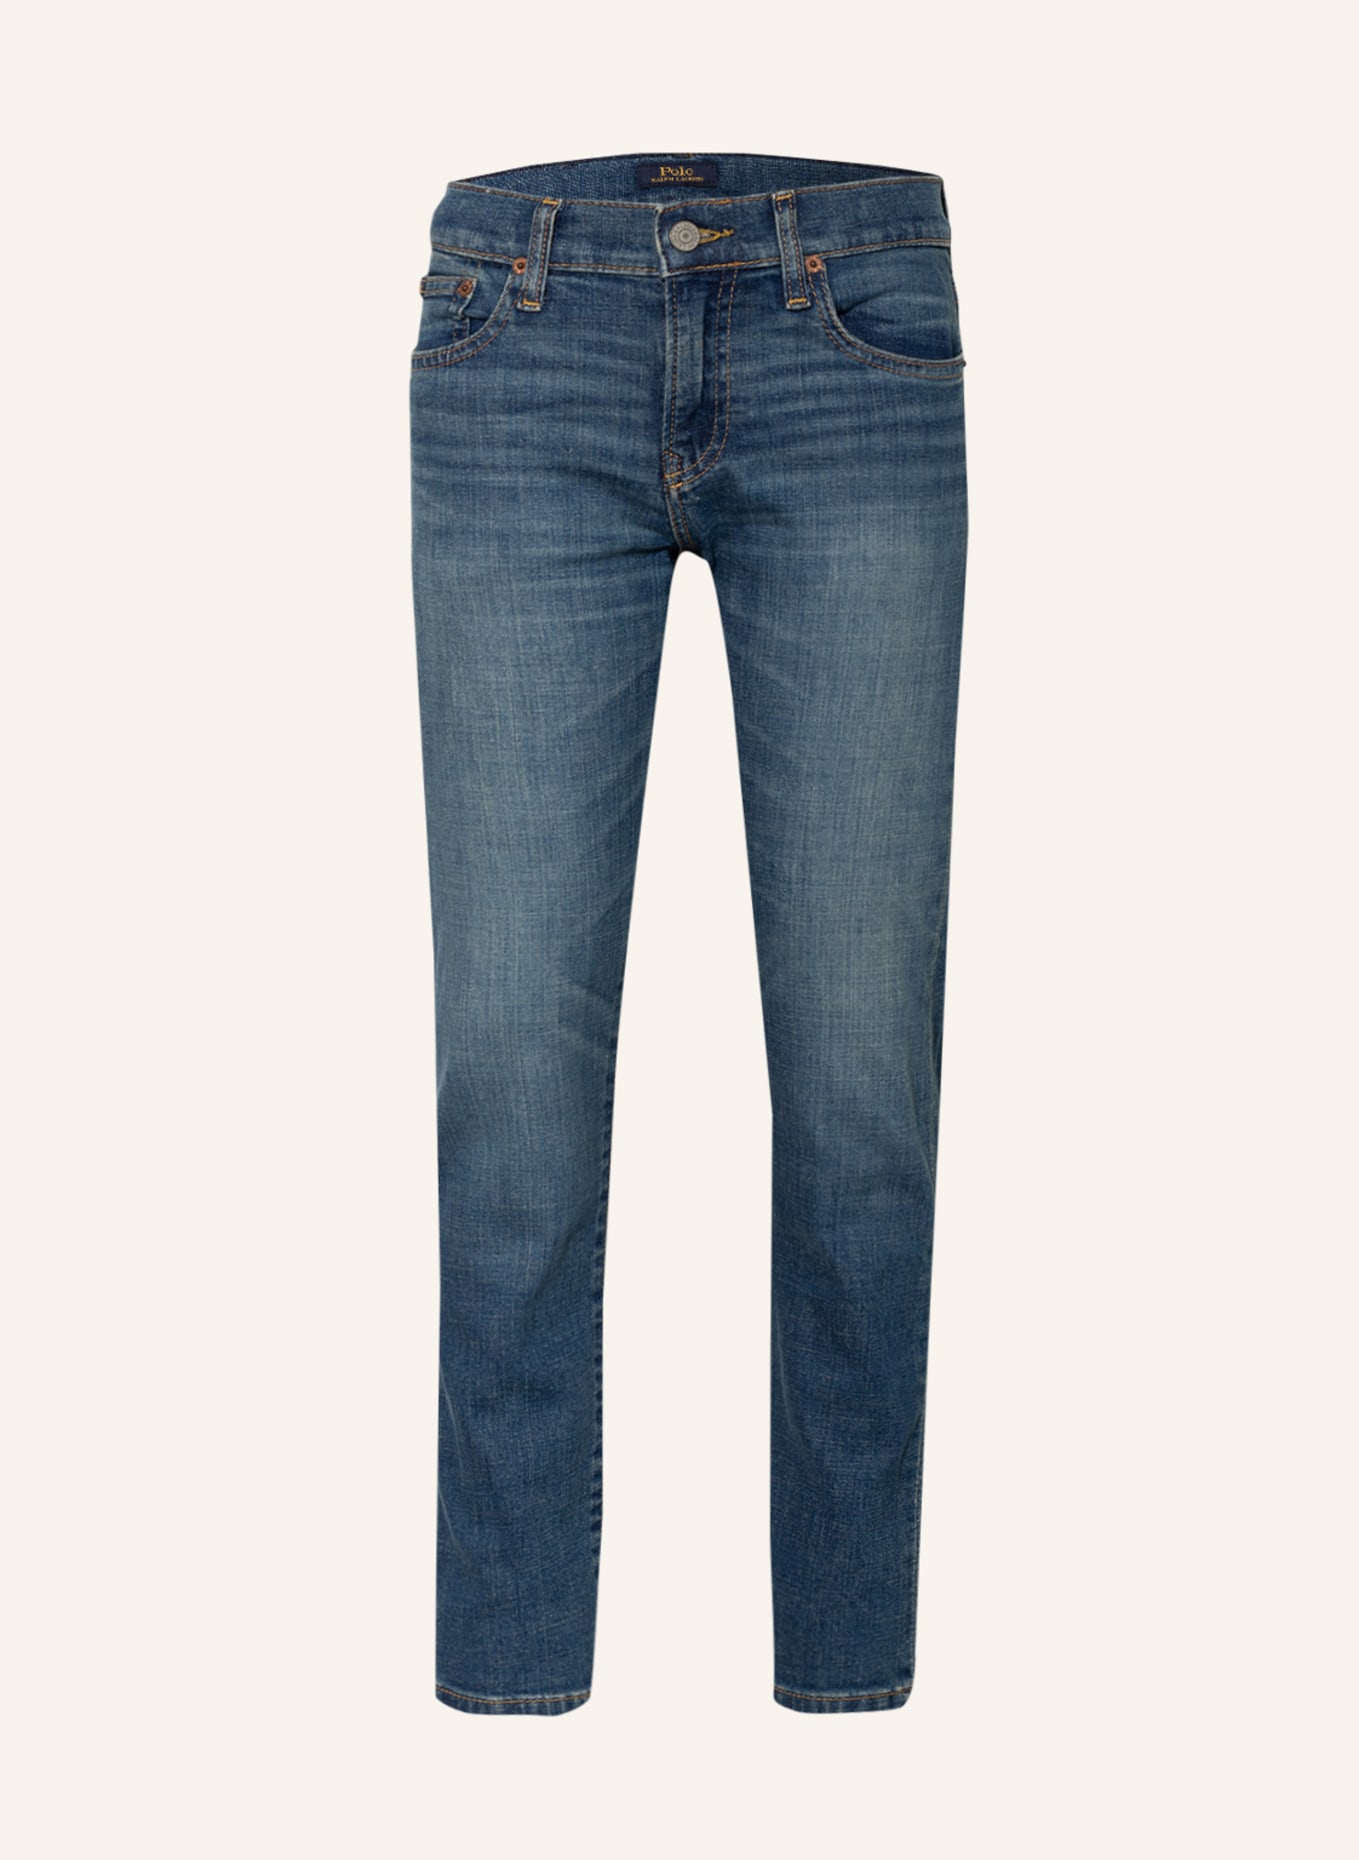 POLO RALPH LAUREN Jeans Super Slim Fit, Farbe: 001 WOODHAVEN WASH (Bild 1)